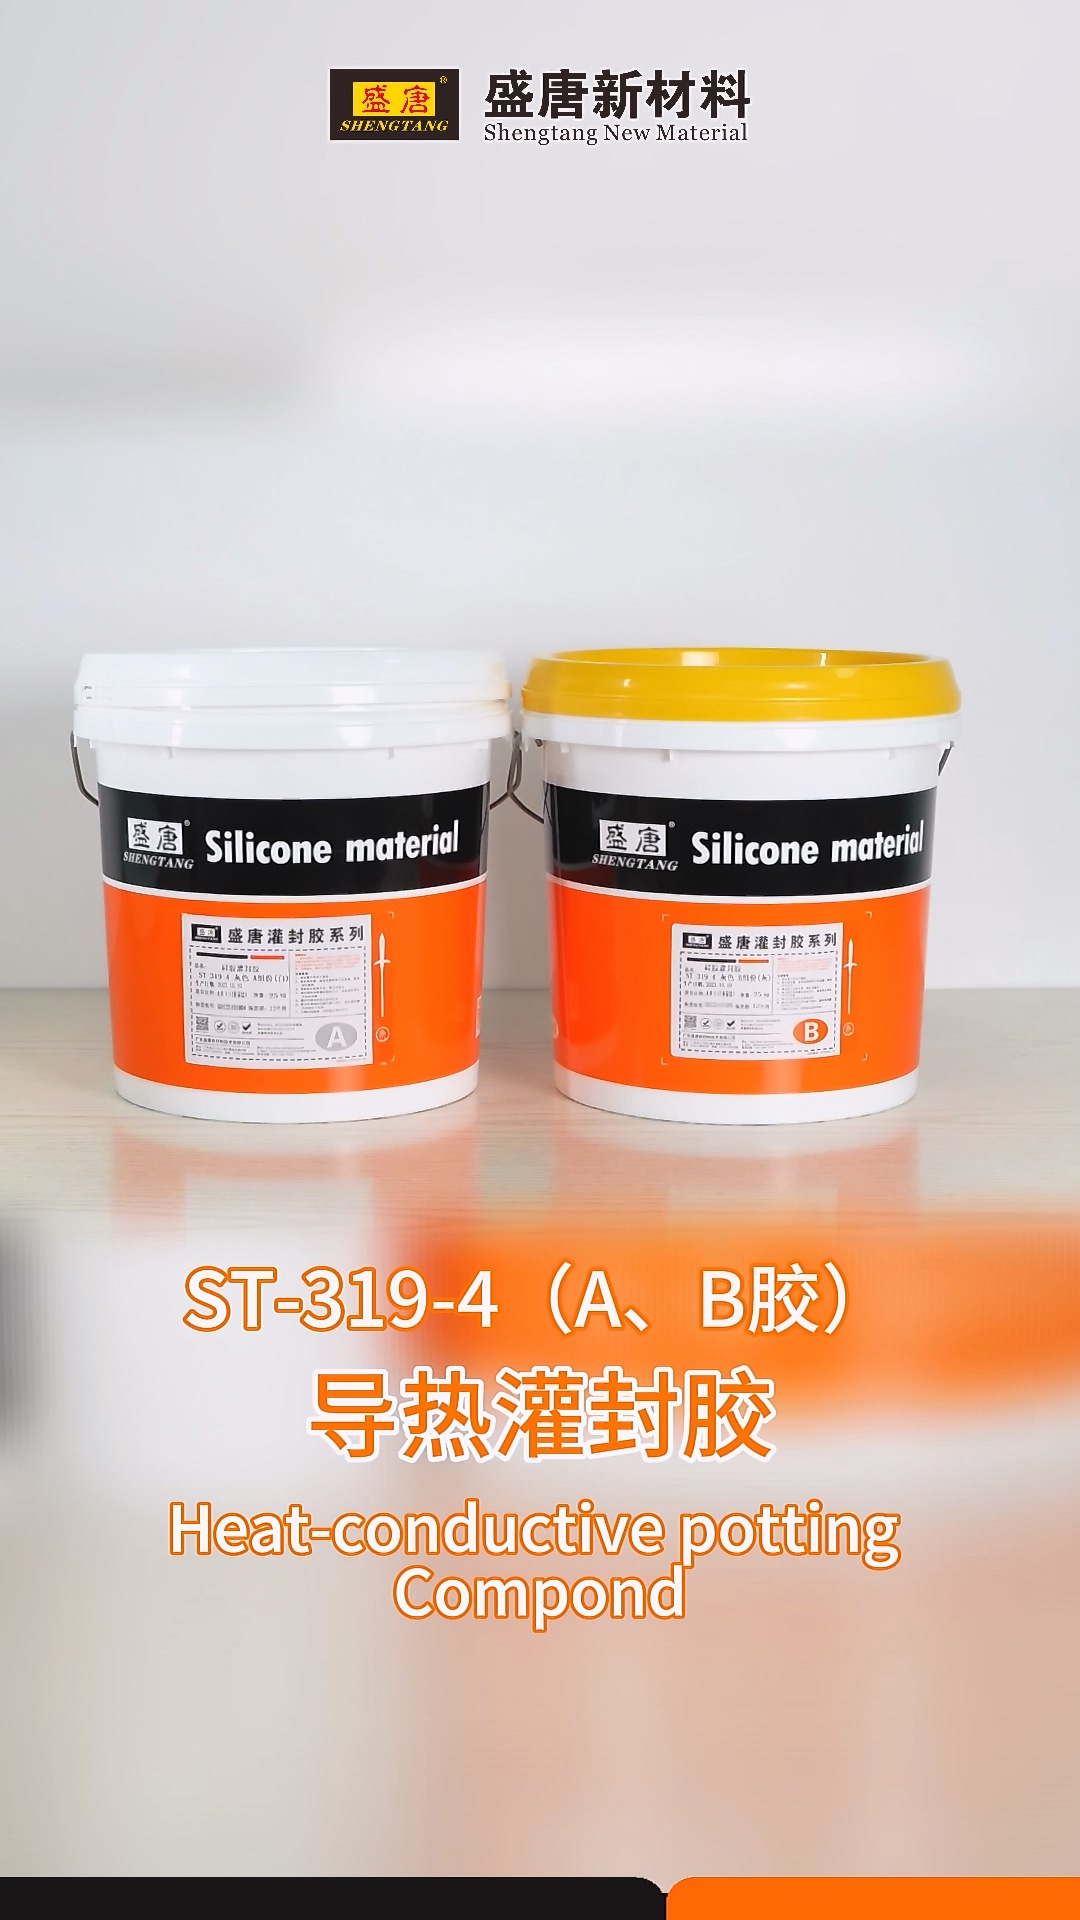 ST-319-4 Heat-conductive potting compound